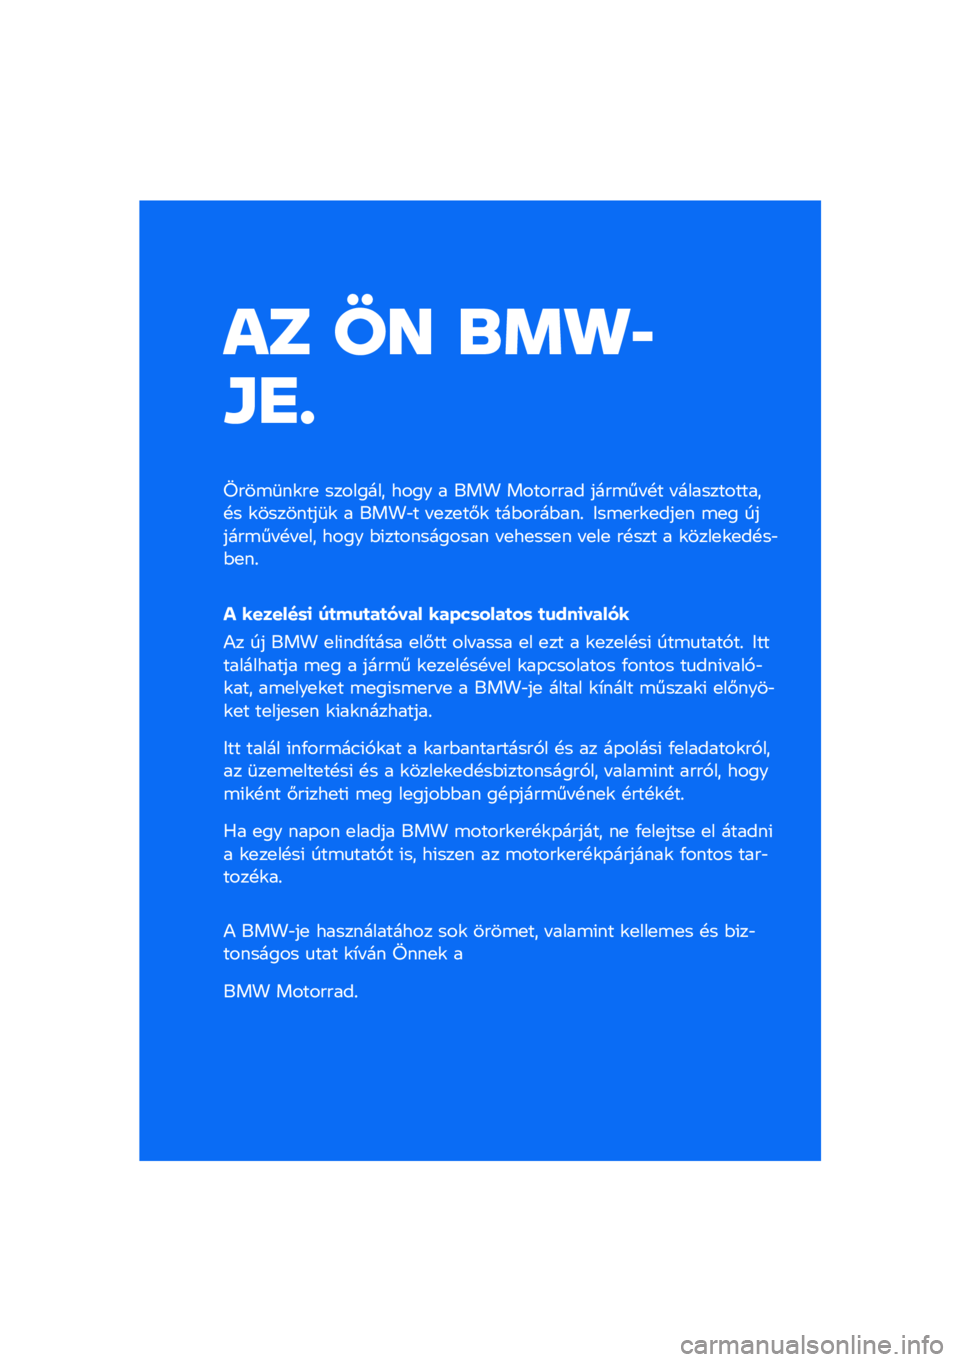 BMW MOTORRAD CE 04 2021  Kezelési útmutató (in Hungarian) �� �� �\b�	�
�
�\f�
�
����\b�	��\f��
 �������� ���� � ��� �������� ����\b�� �!� � ������������!� �\f��������	�\f � ����"� � �
��
��#�\